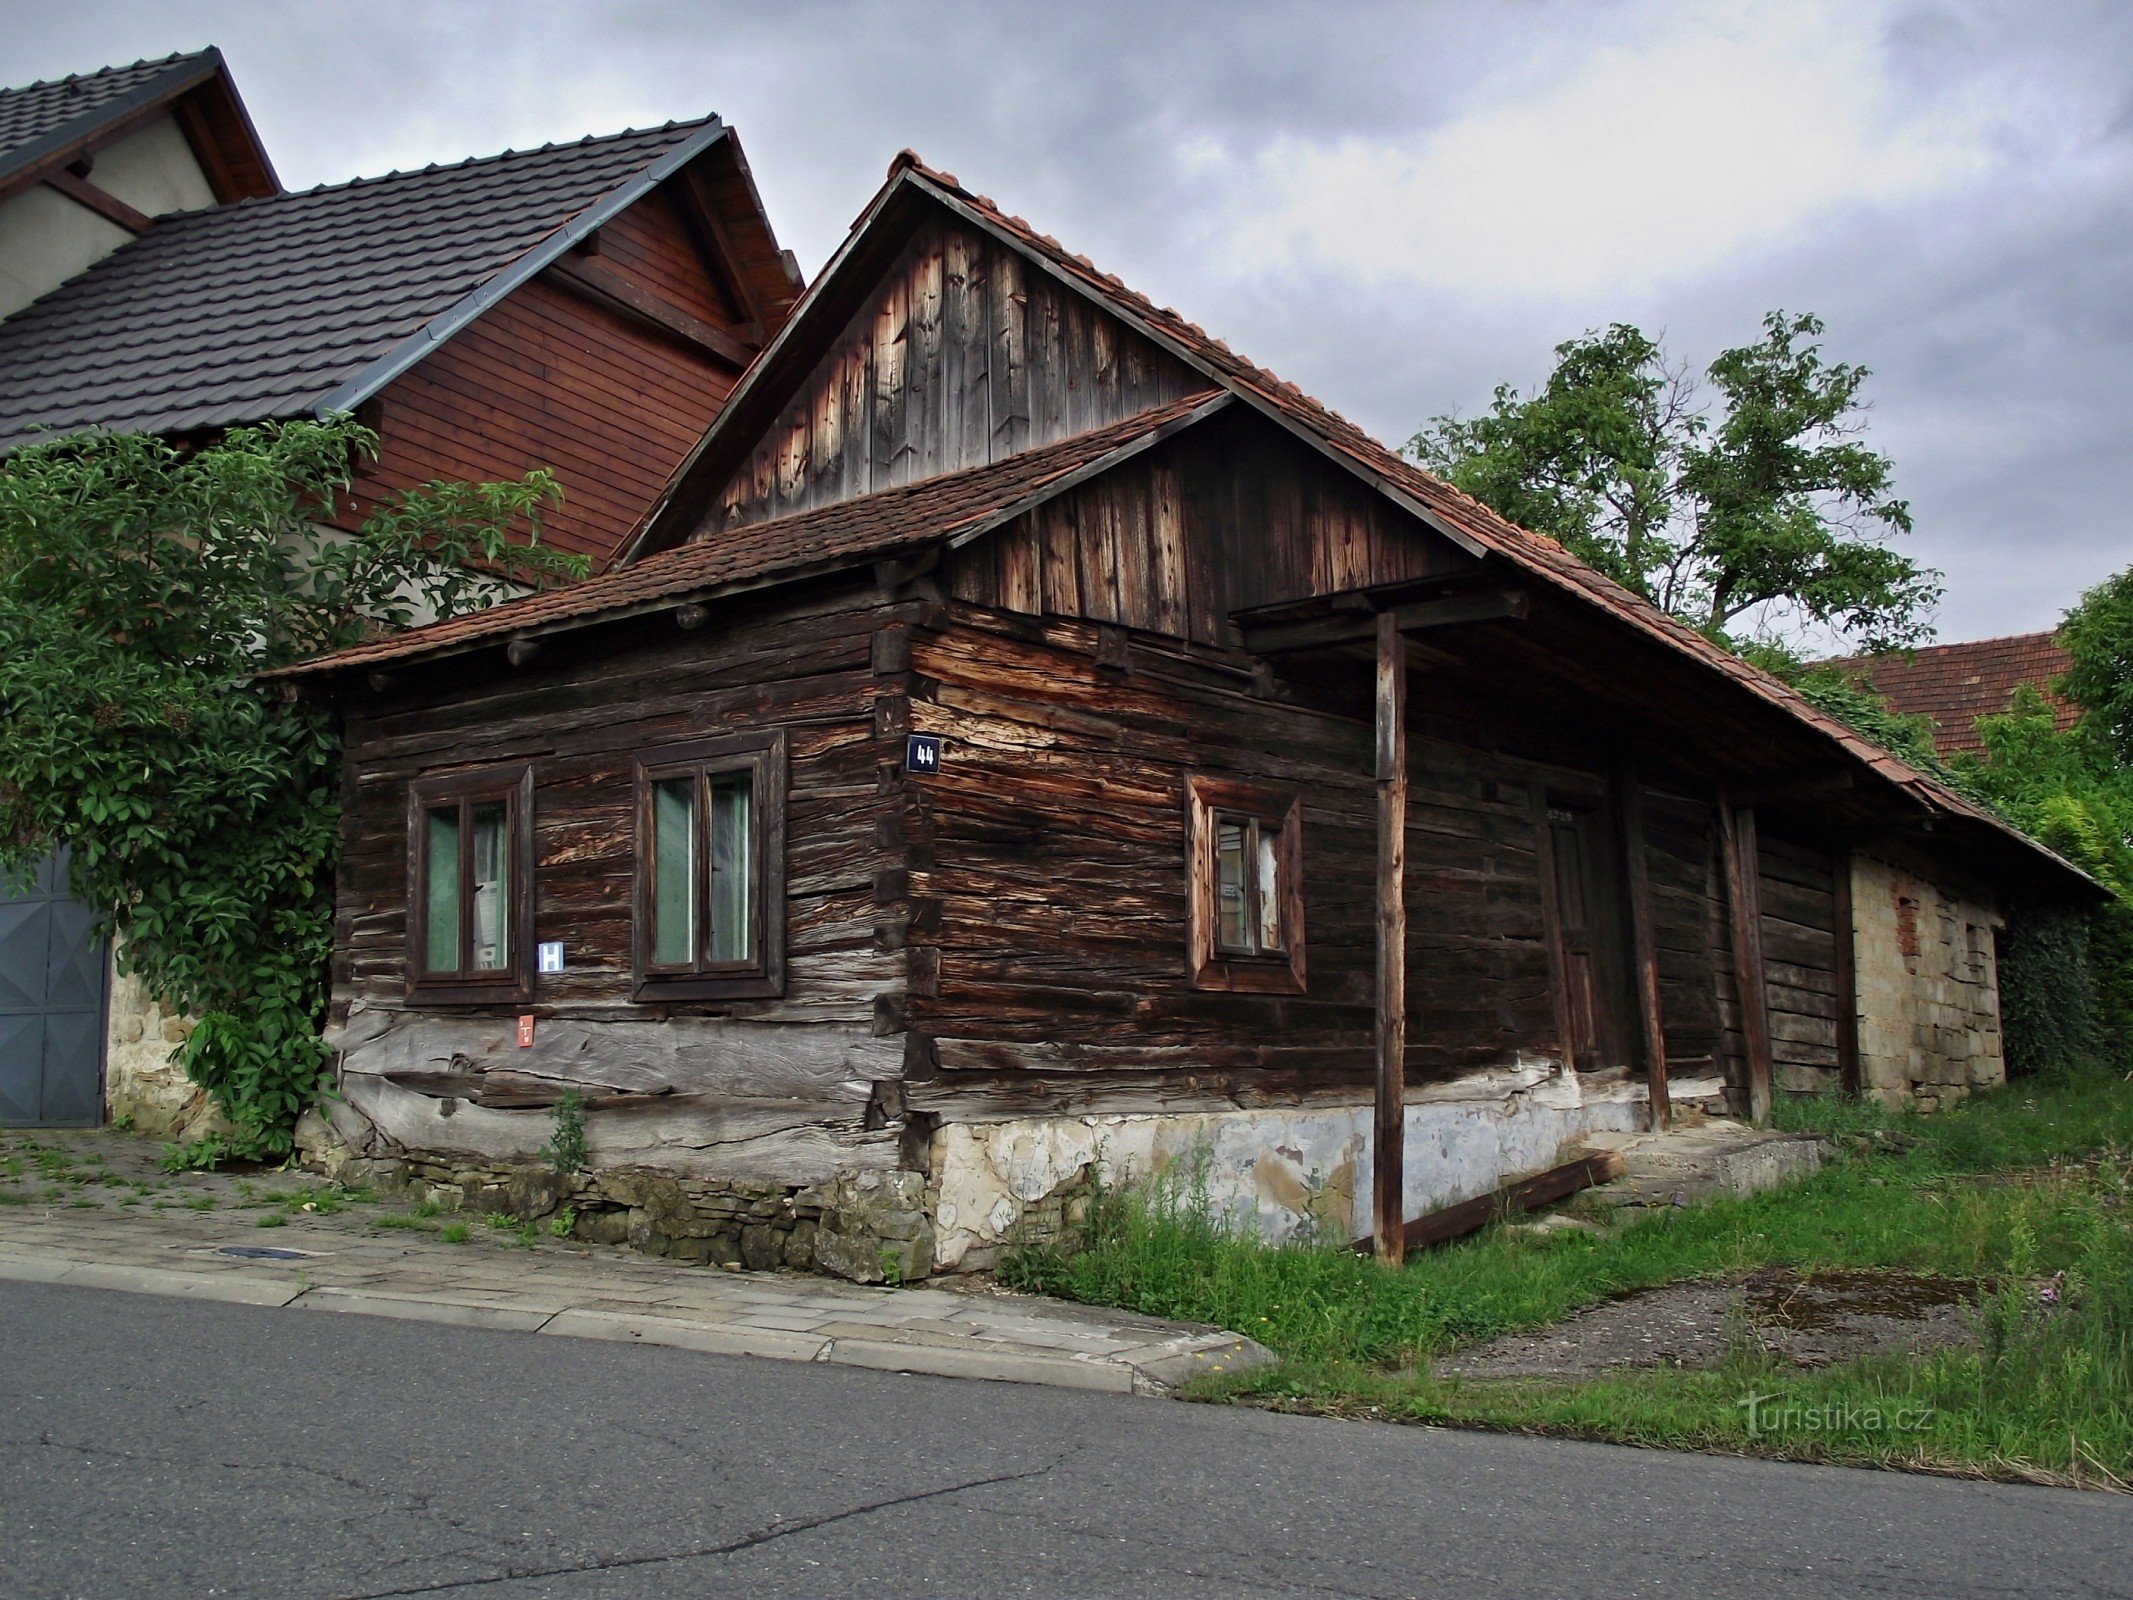 Vlachova Lhota – houten huis nr. 44